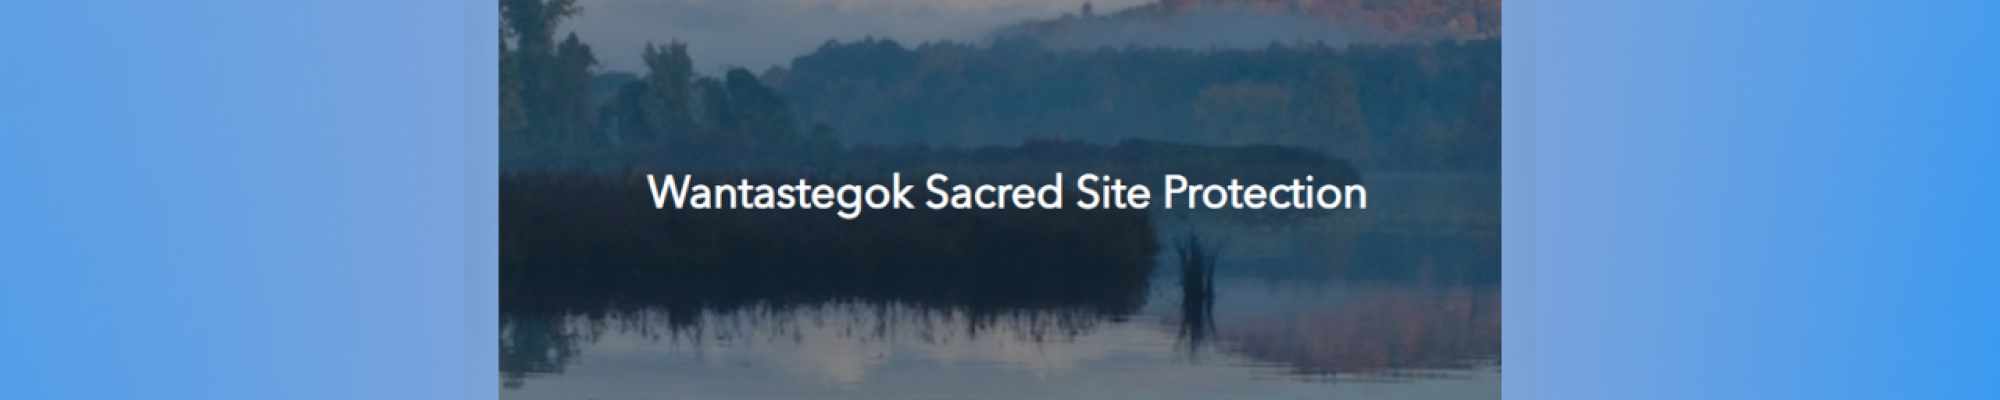 Wantastegok Sacred Site Protection Campaign